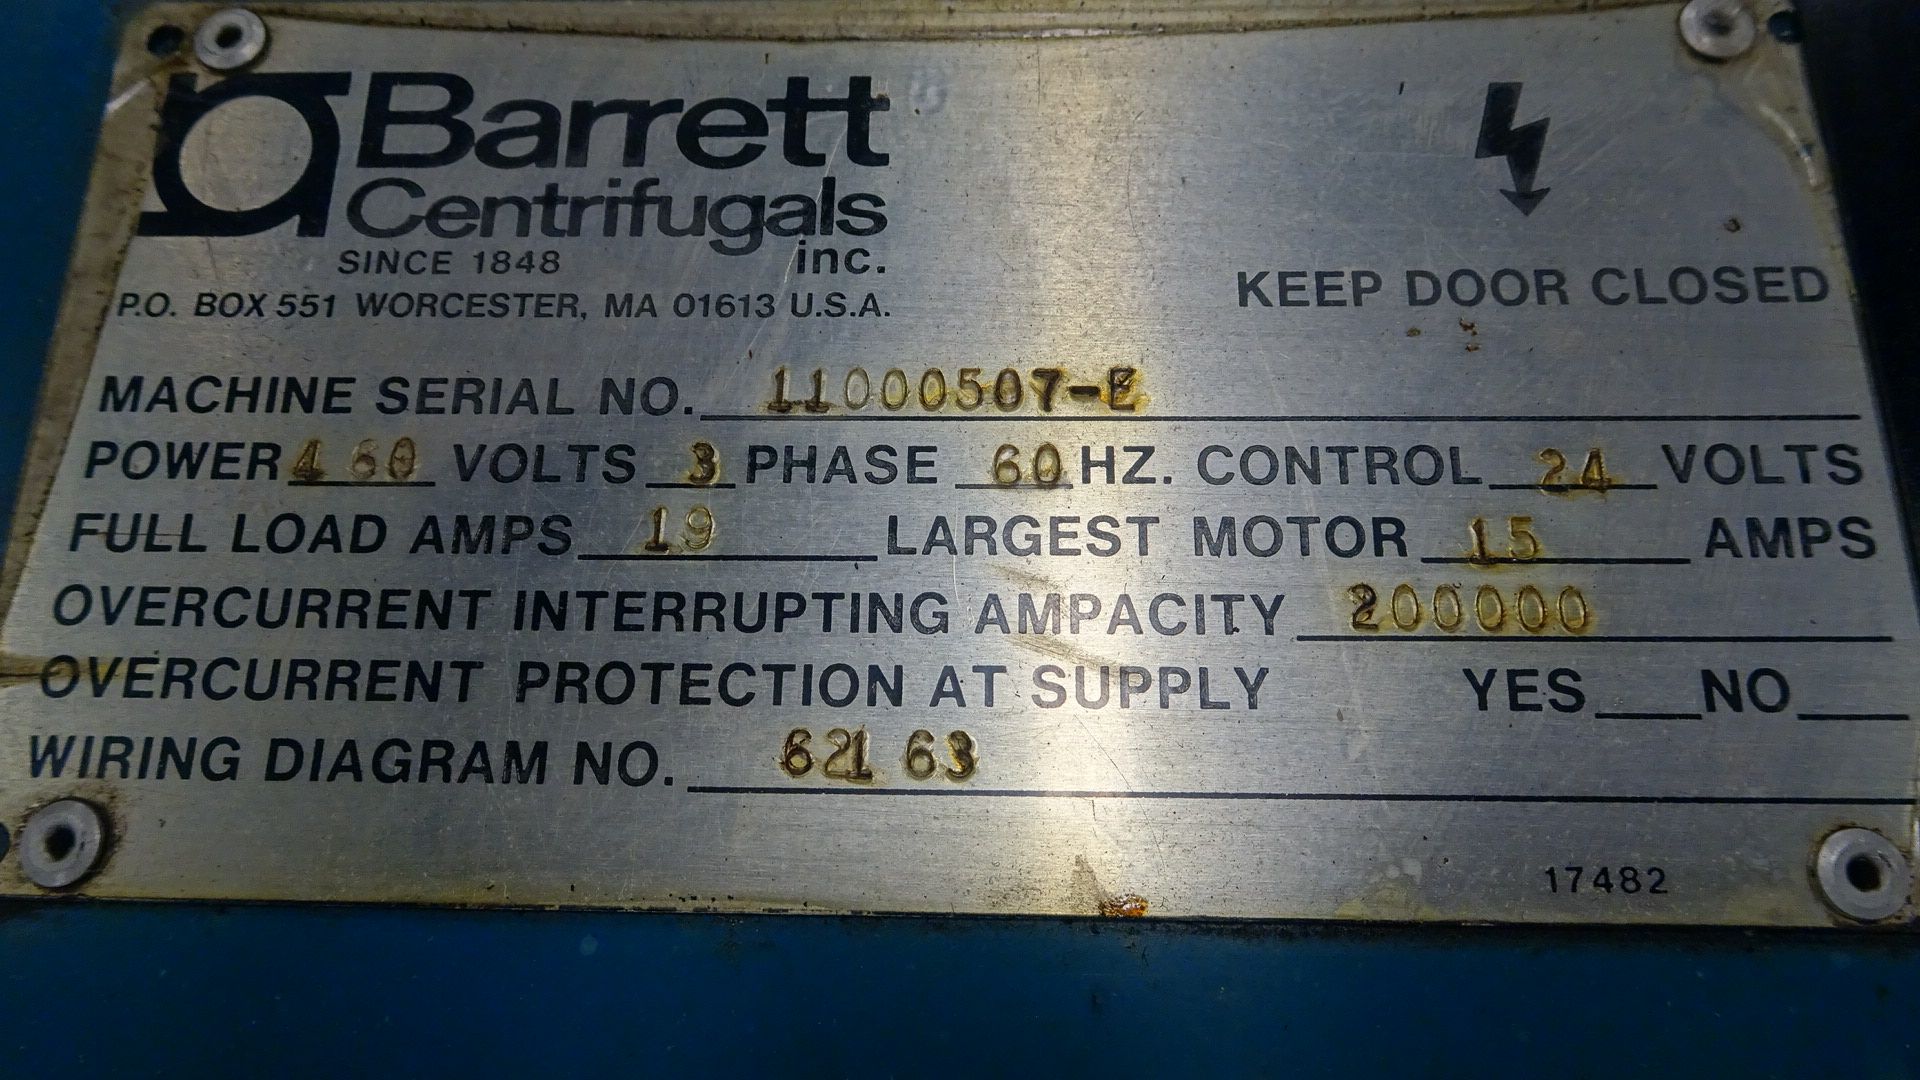 Barrett Model 1100 Centrifugal Chip Spinner, sn:11000507-E (*See Photos) - Image 3 of 4